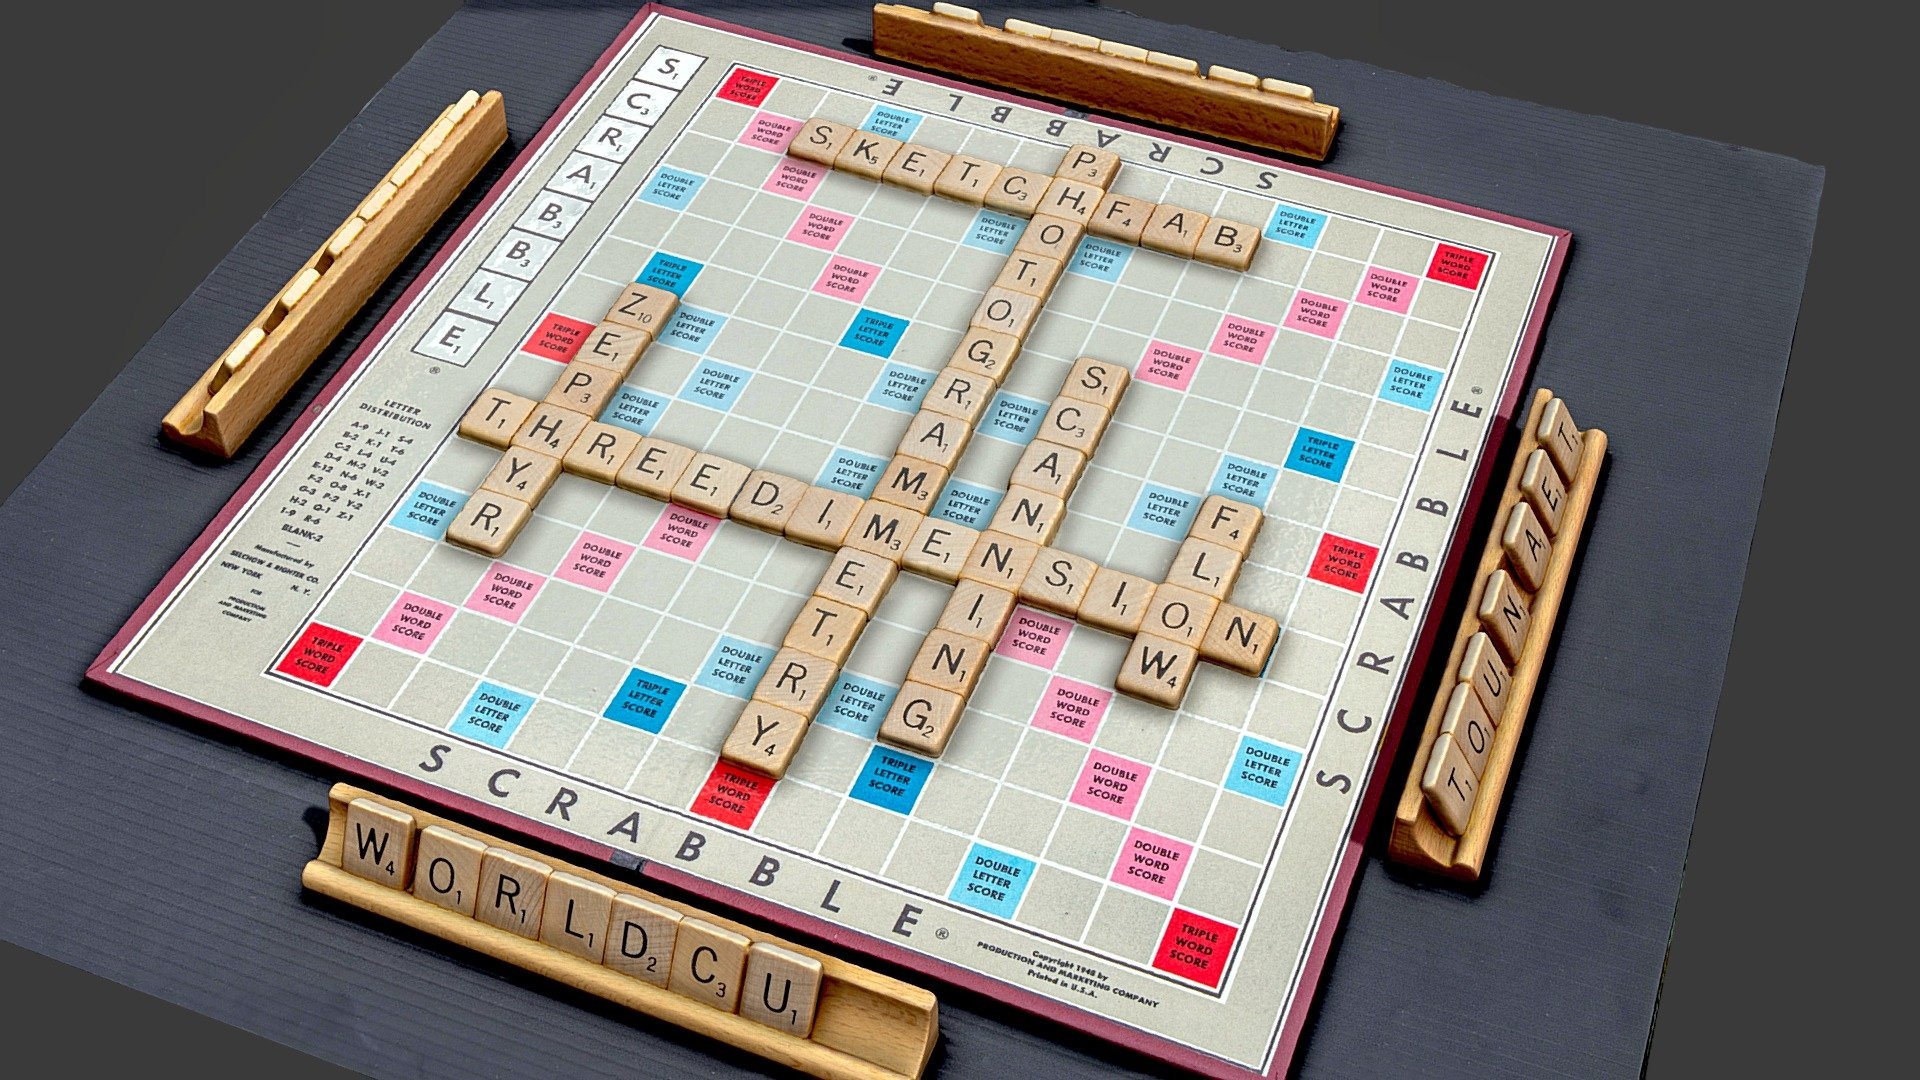 Scrabble: A 3D model of an ongoing 4-man match in a popular crossword-style board game. 1920x1080 Full HD Wallpaper.